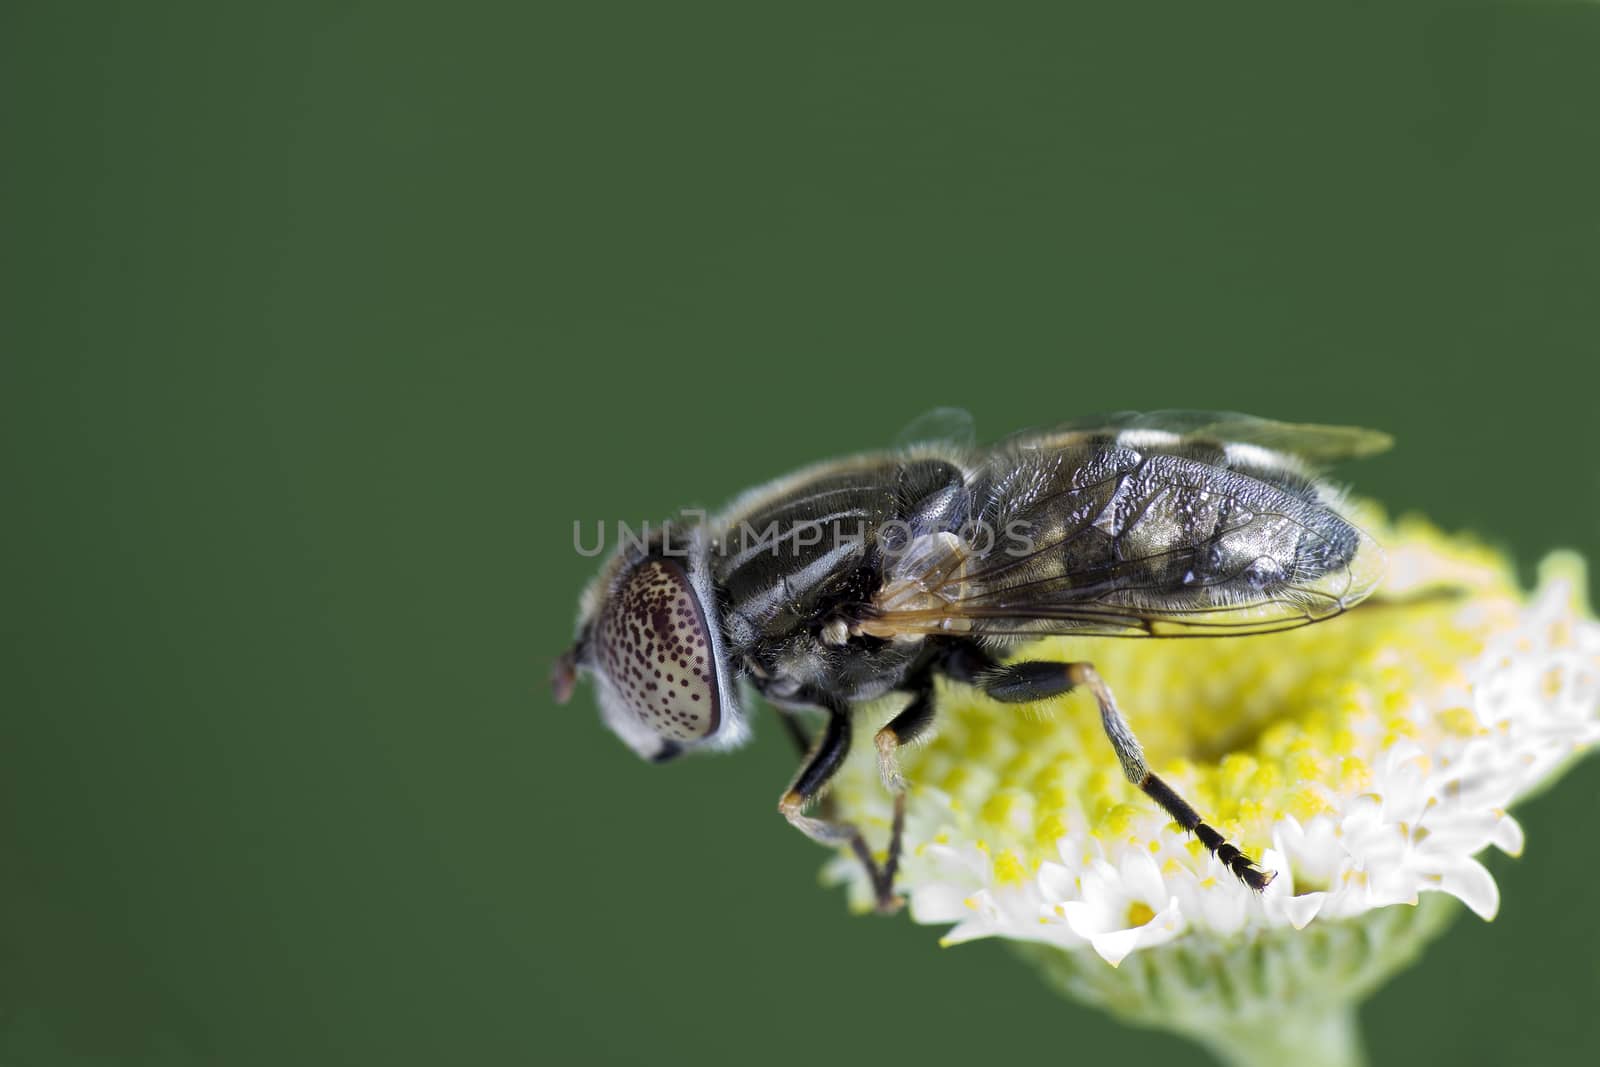 Large spotty-eyed dronefly {Eristalinus aeneus) on a flower by Kidza